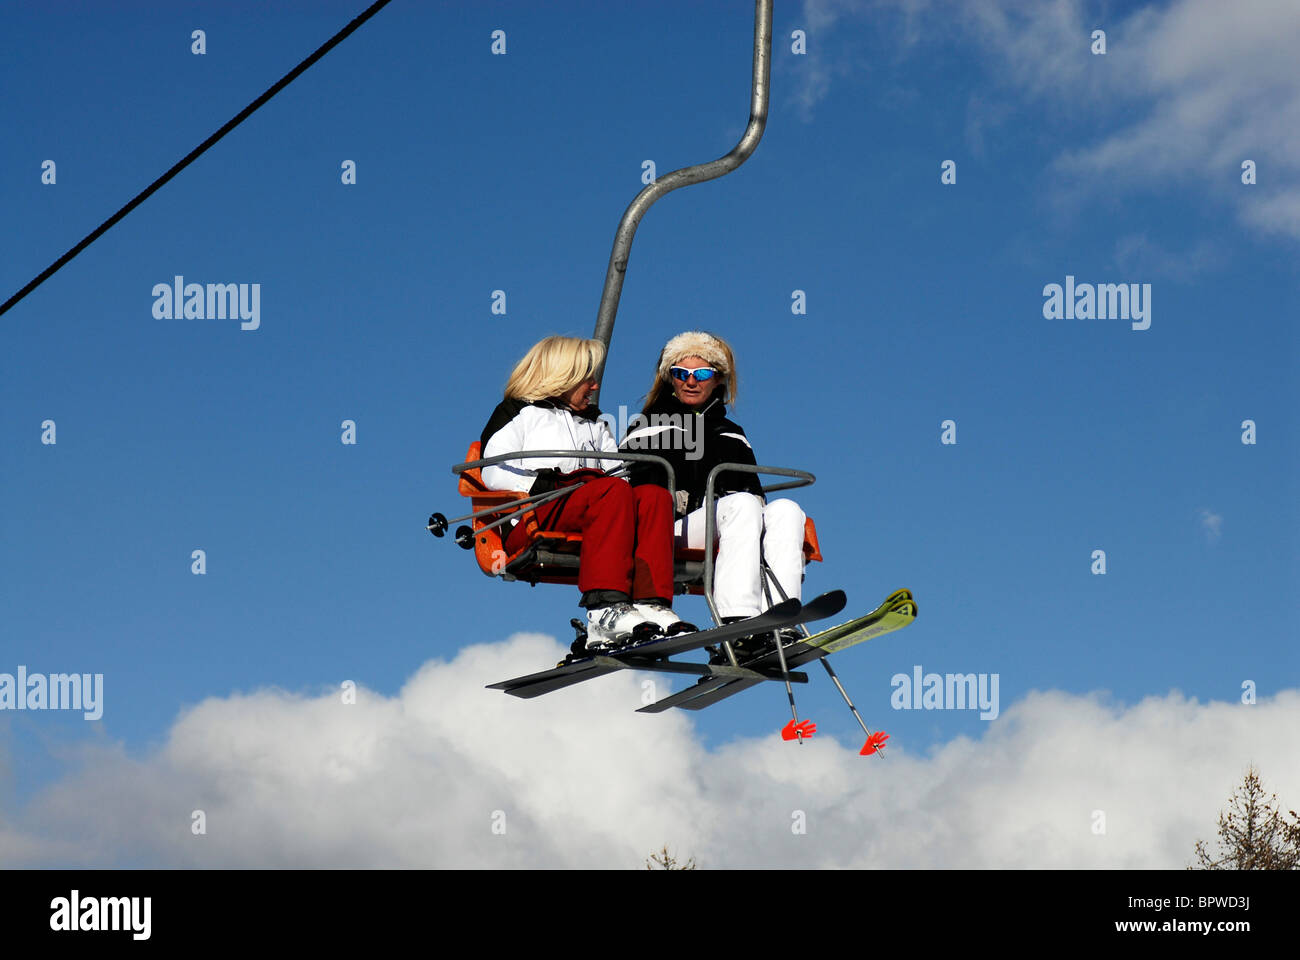 Wintersport. Ski Sauze d, Italien. Skifahrer fahren die Rocce Nere Sesselbahn den Hang hinauf. Stockfoto